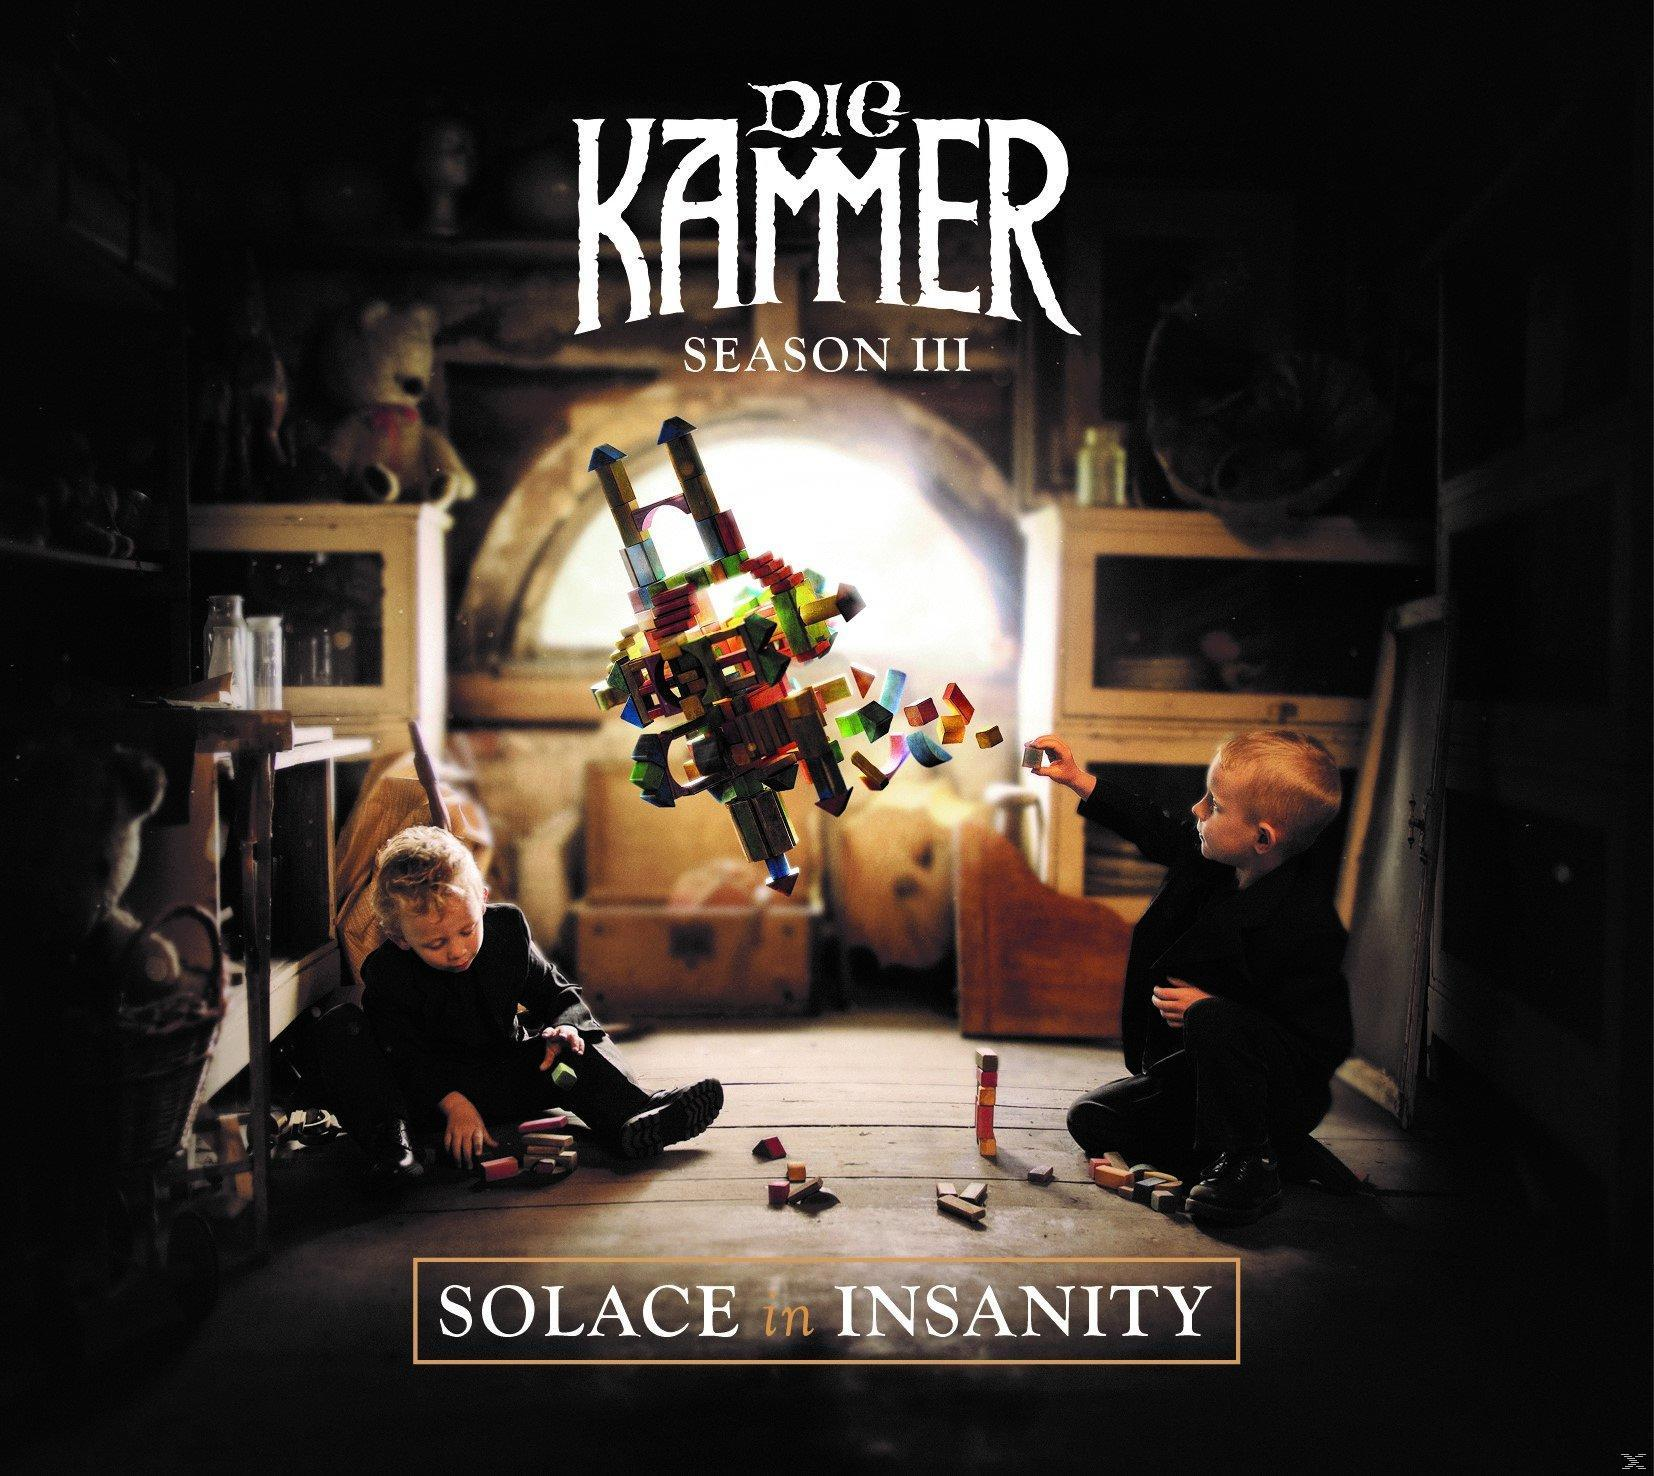 (Vinyl) In Season Kammer - Iii: (Vinyl) Solace Insanity -